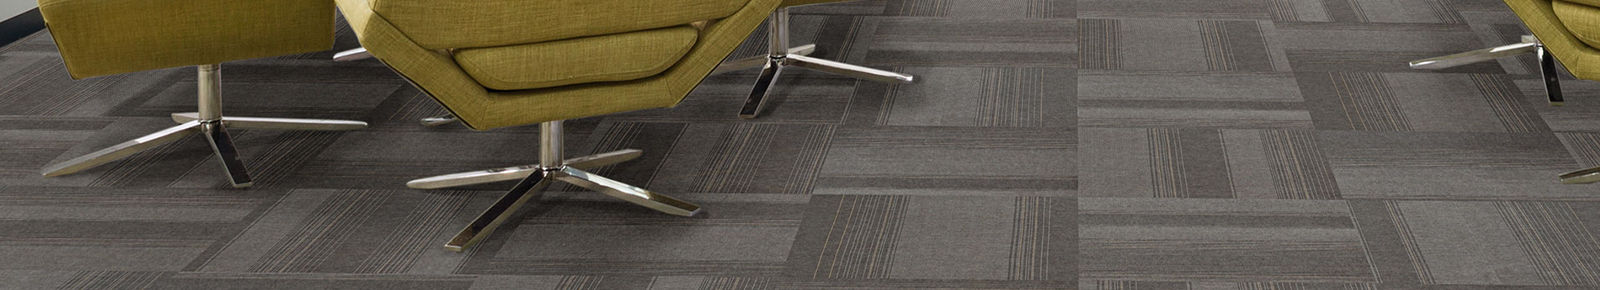 Patterned carpet tiles on office floor